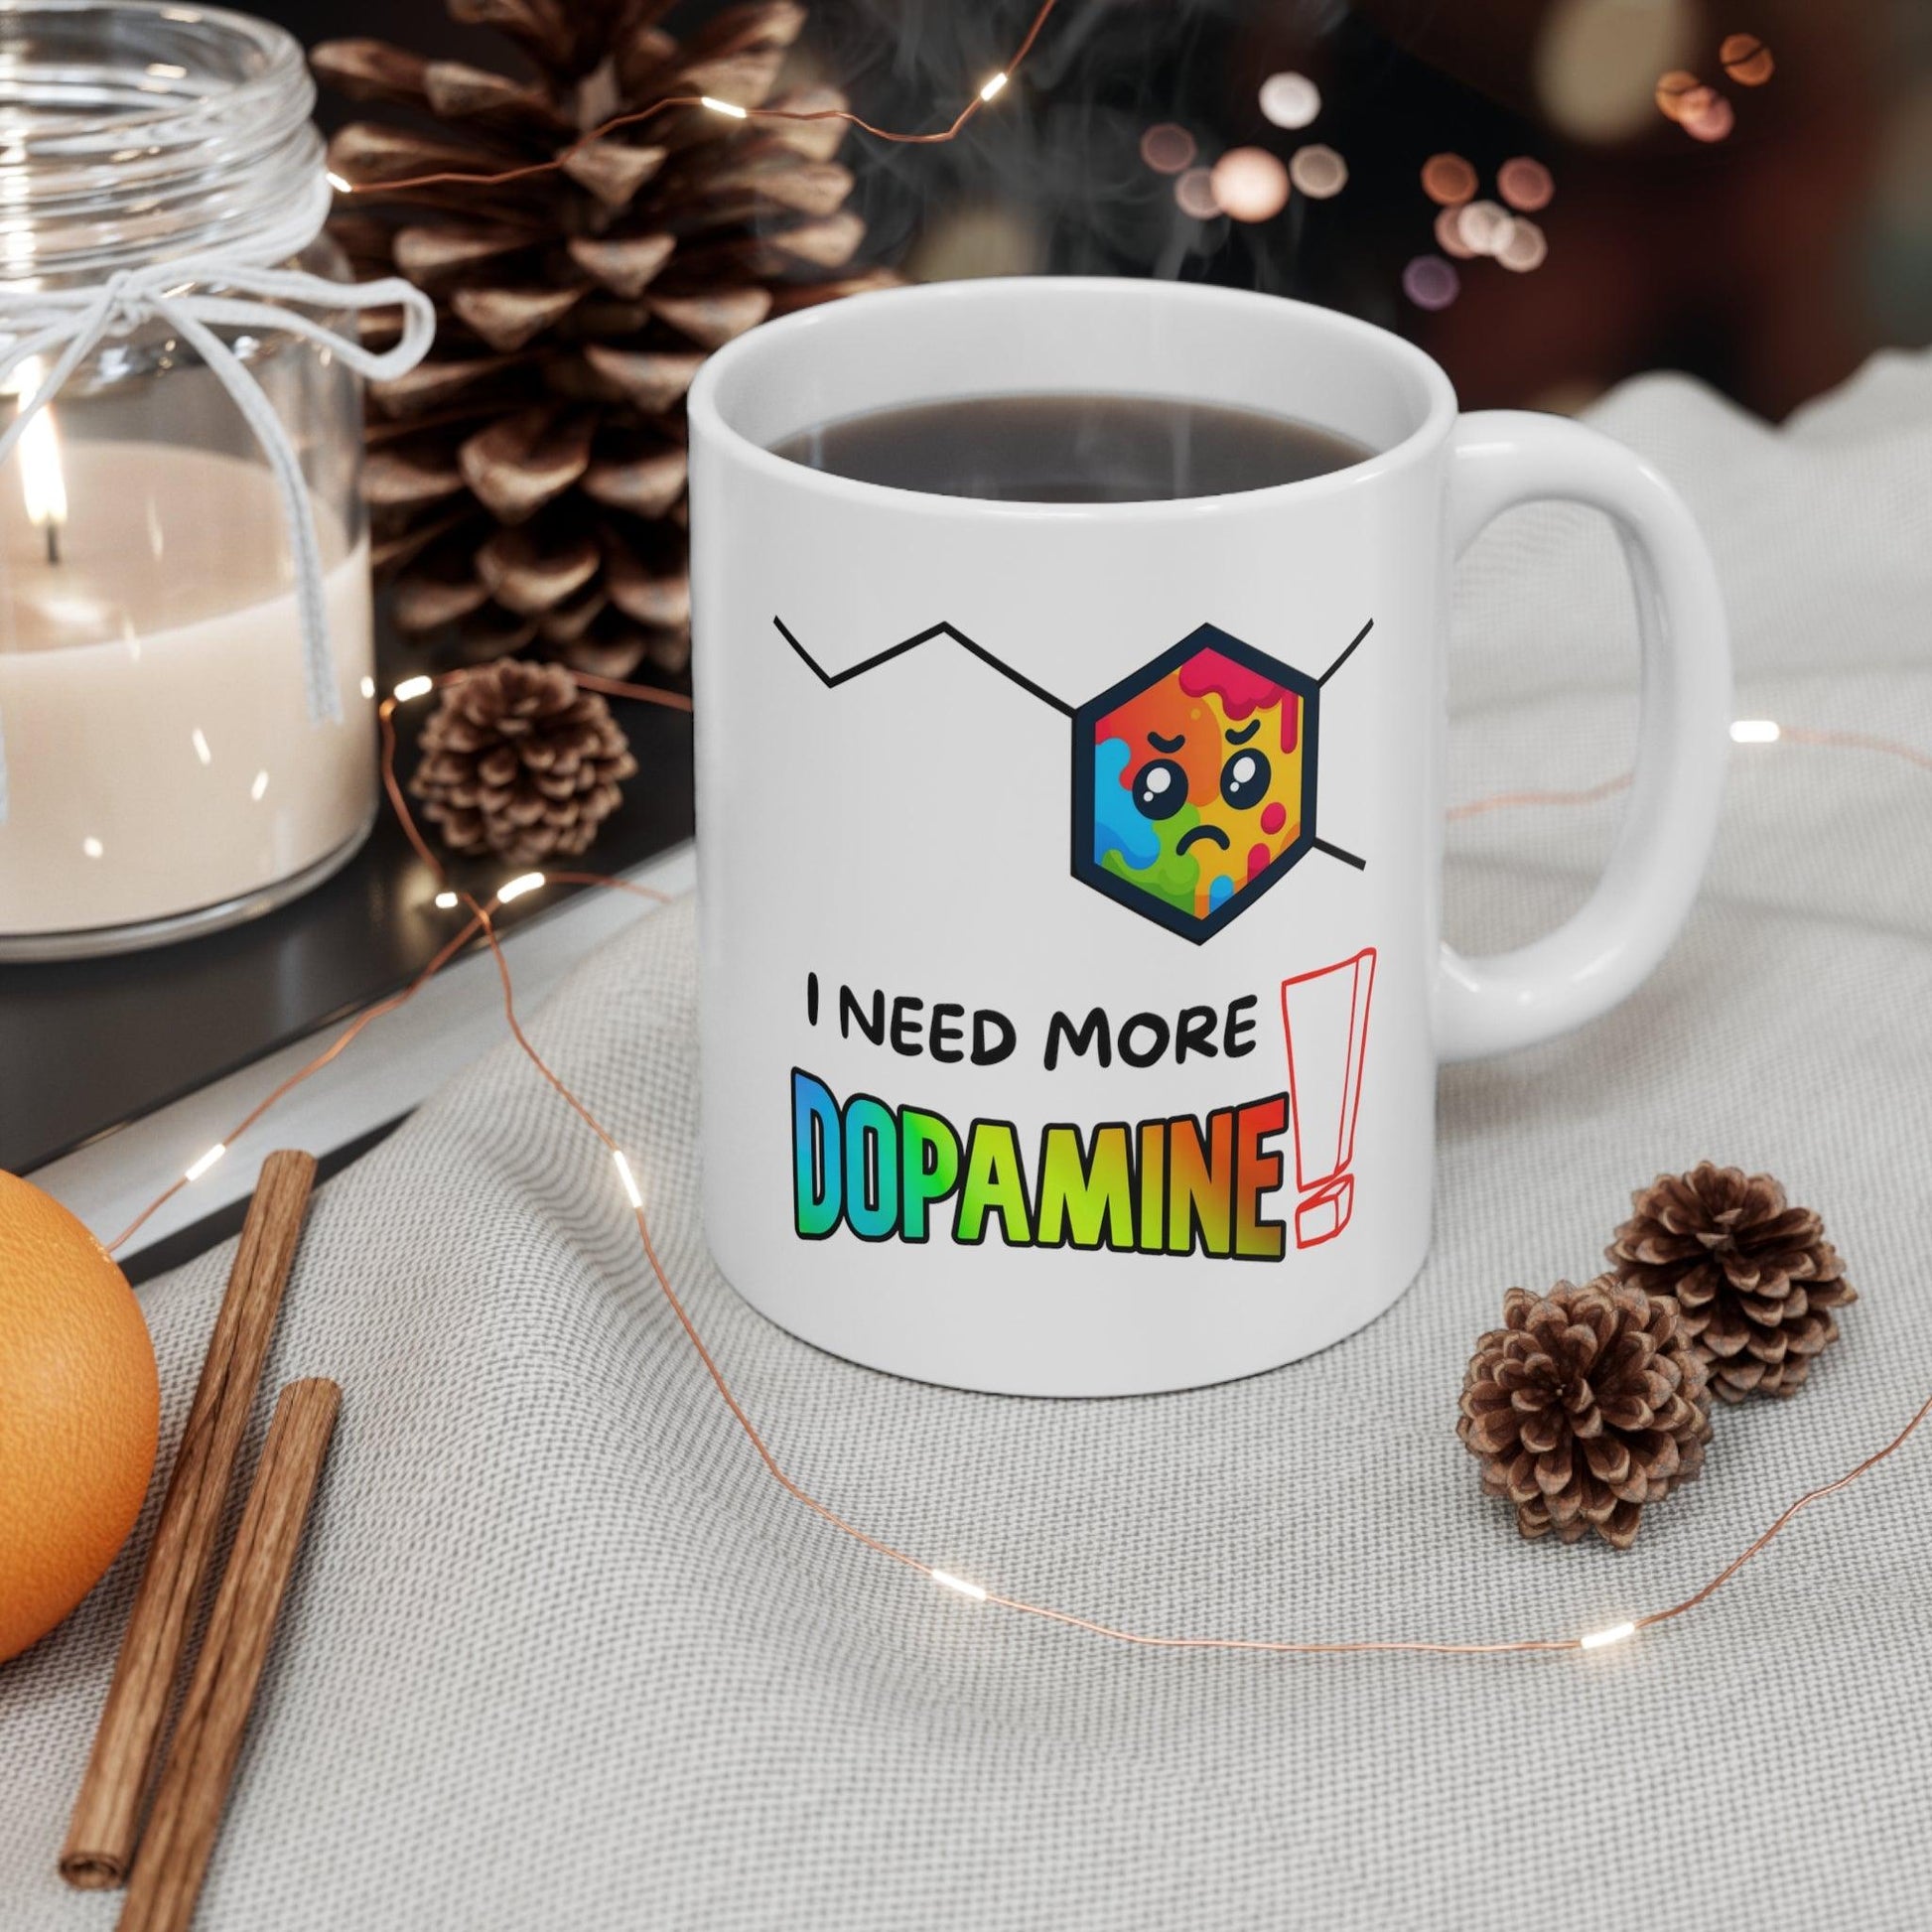 ADHD Dopamine Boost Mug - 'I Need More Dopamine' Humor - Neurodiversity Gift Cup - Fidget and Focus